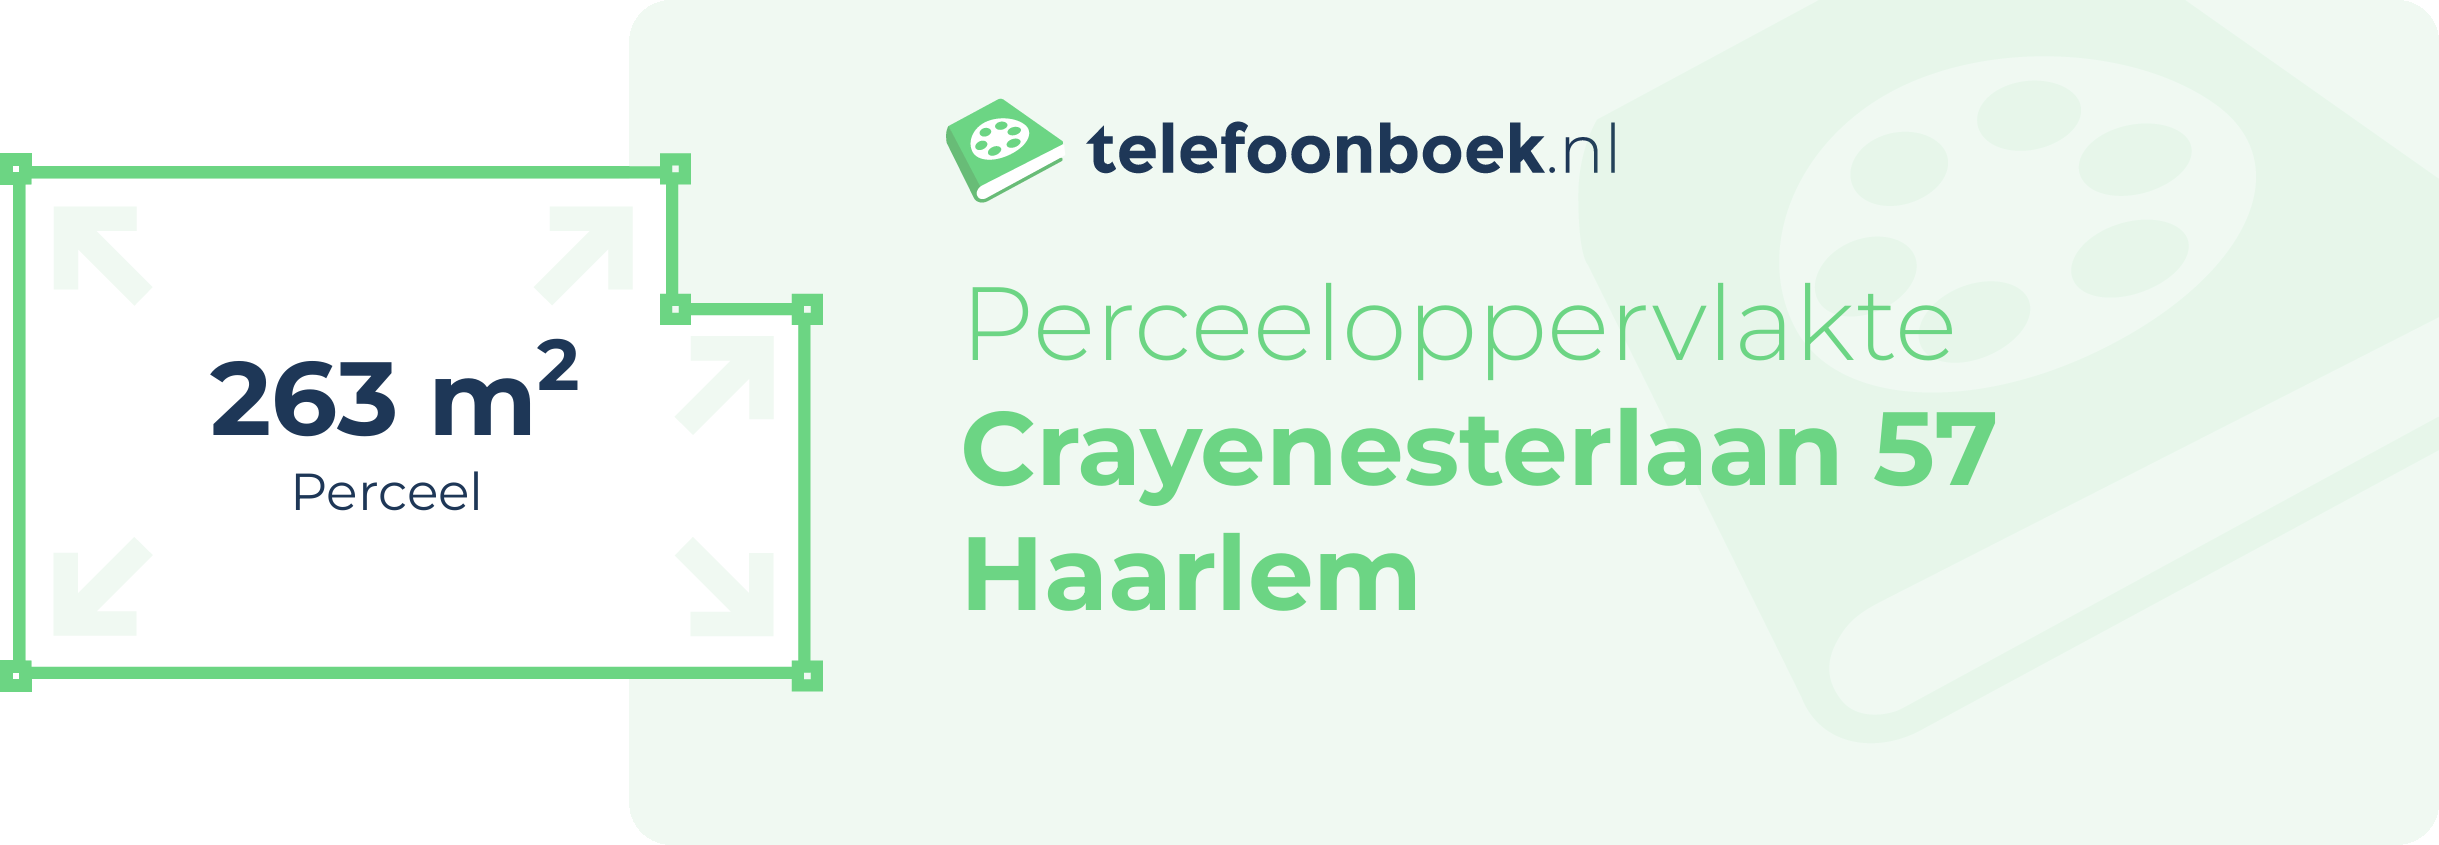 Perceeloppervlakte Crayenesterlaan 57 Haarlem